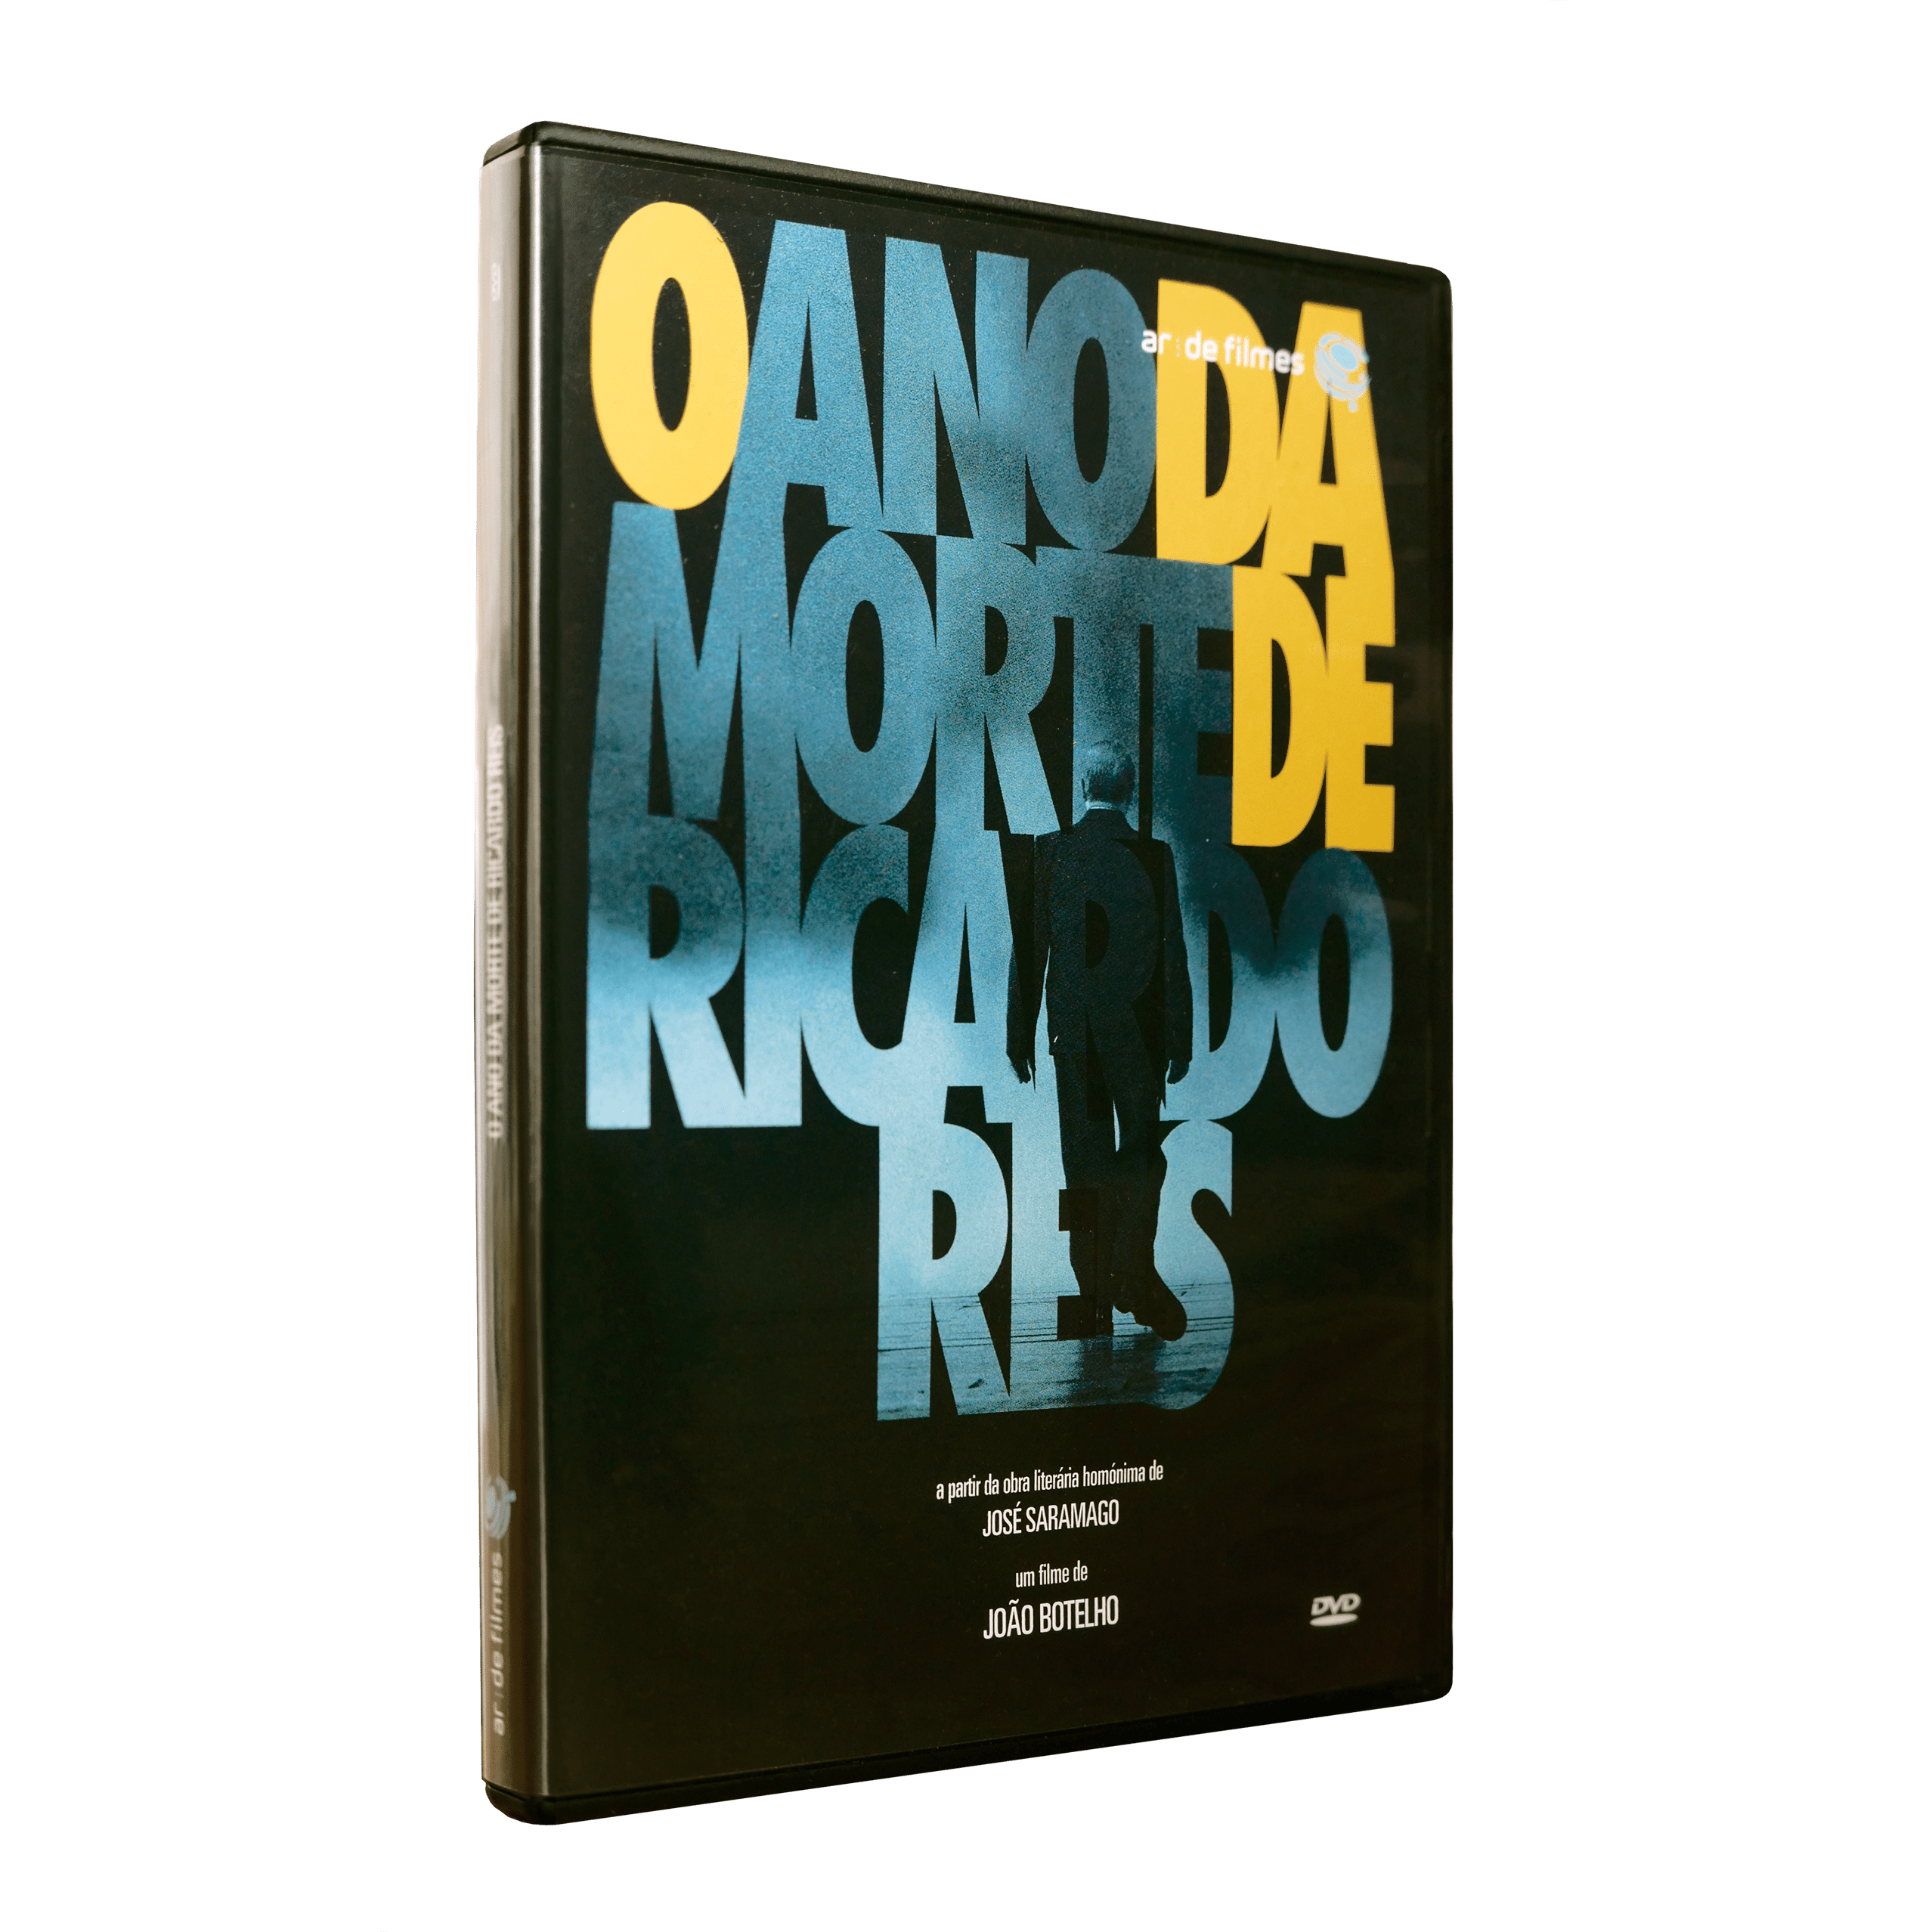 Death Is a Festival by João José Reis - Ebook